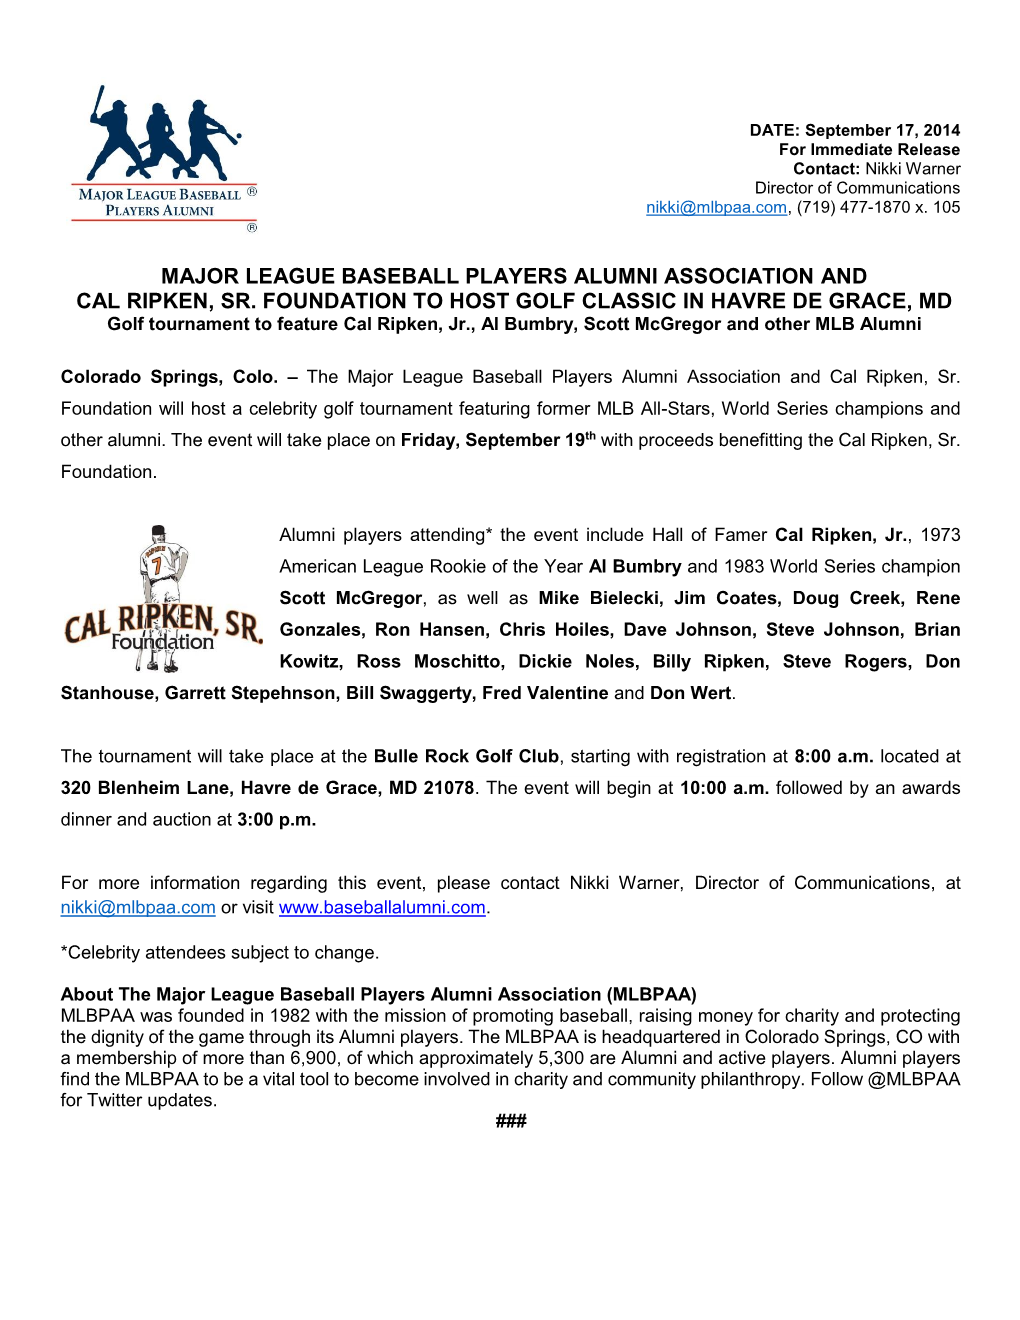 Major League Baseball Players Alumni Association and Cal Ripken, Sr